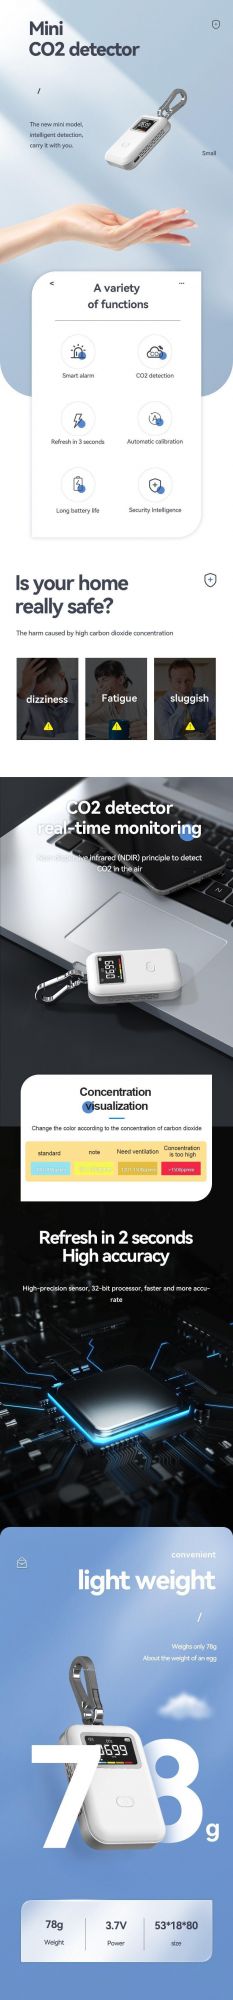 Handheld Portable CO2 Gas Detector